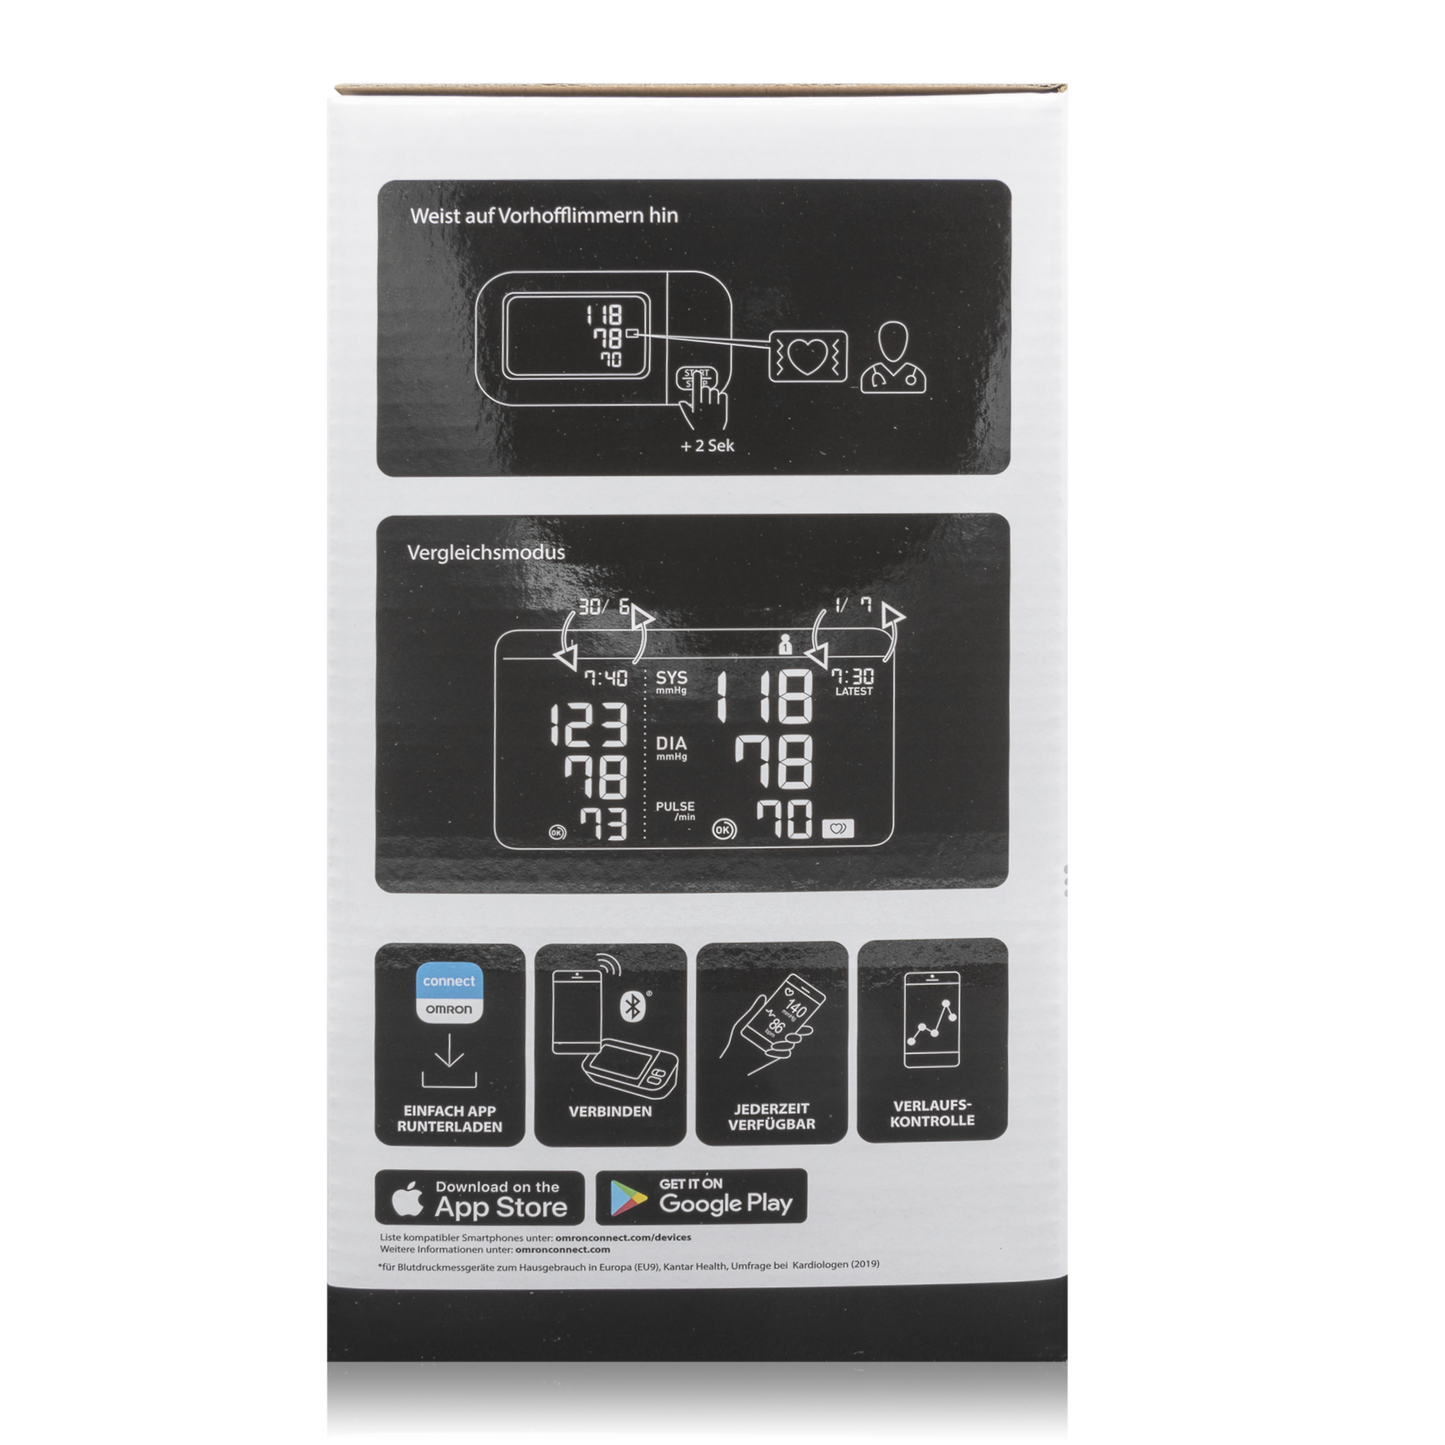 Omron M500 Intelli IT - Automatisches Oberarm-Blutdruckmessgerät (1 St.) - PZN: 15423367 - ROTE.PLACE